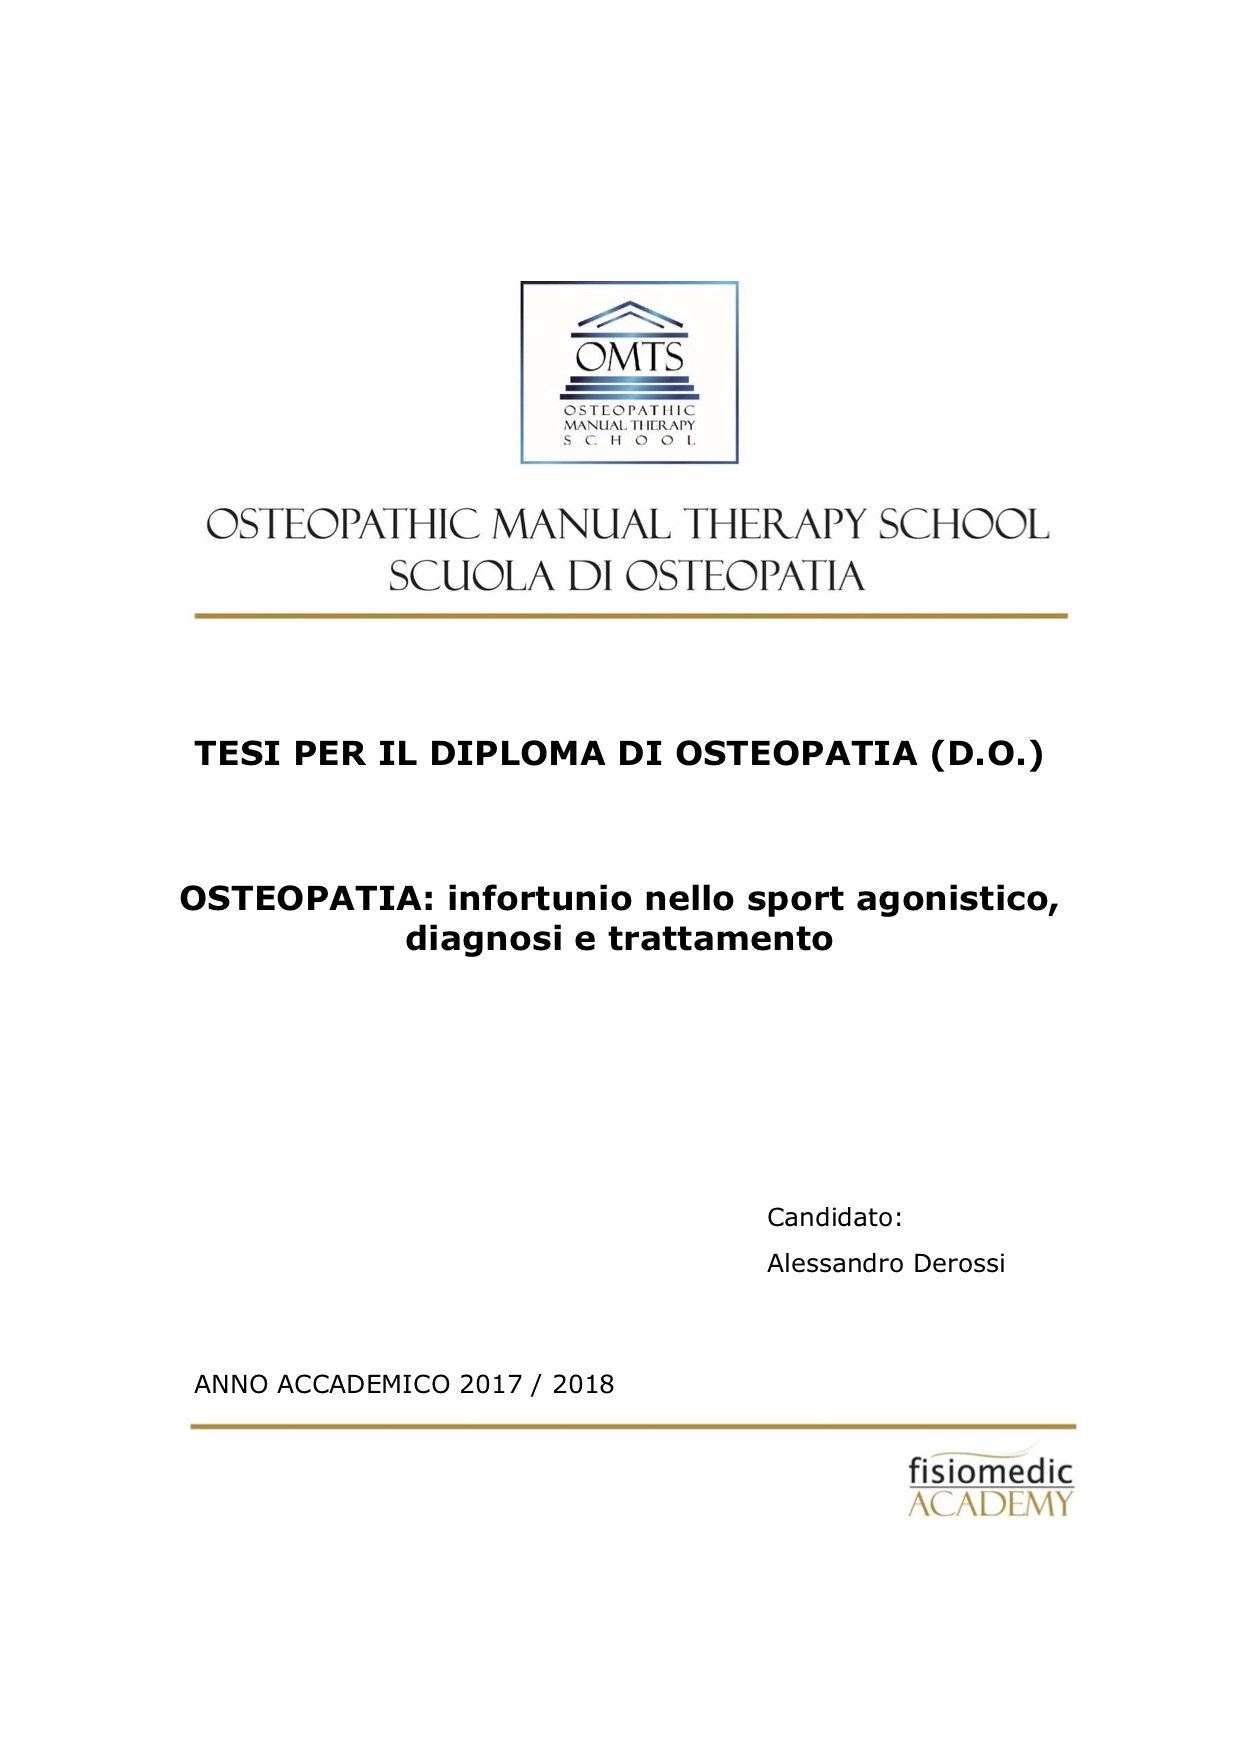 Alessandro Derossi Tesi Diploma Osteopatia 2018